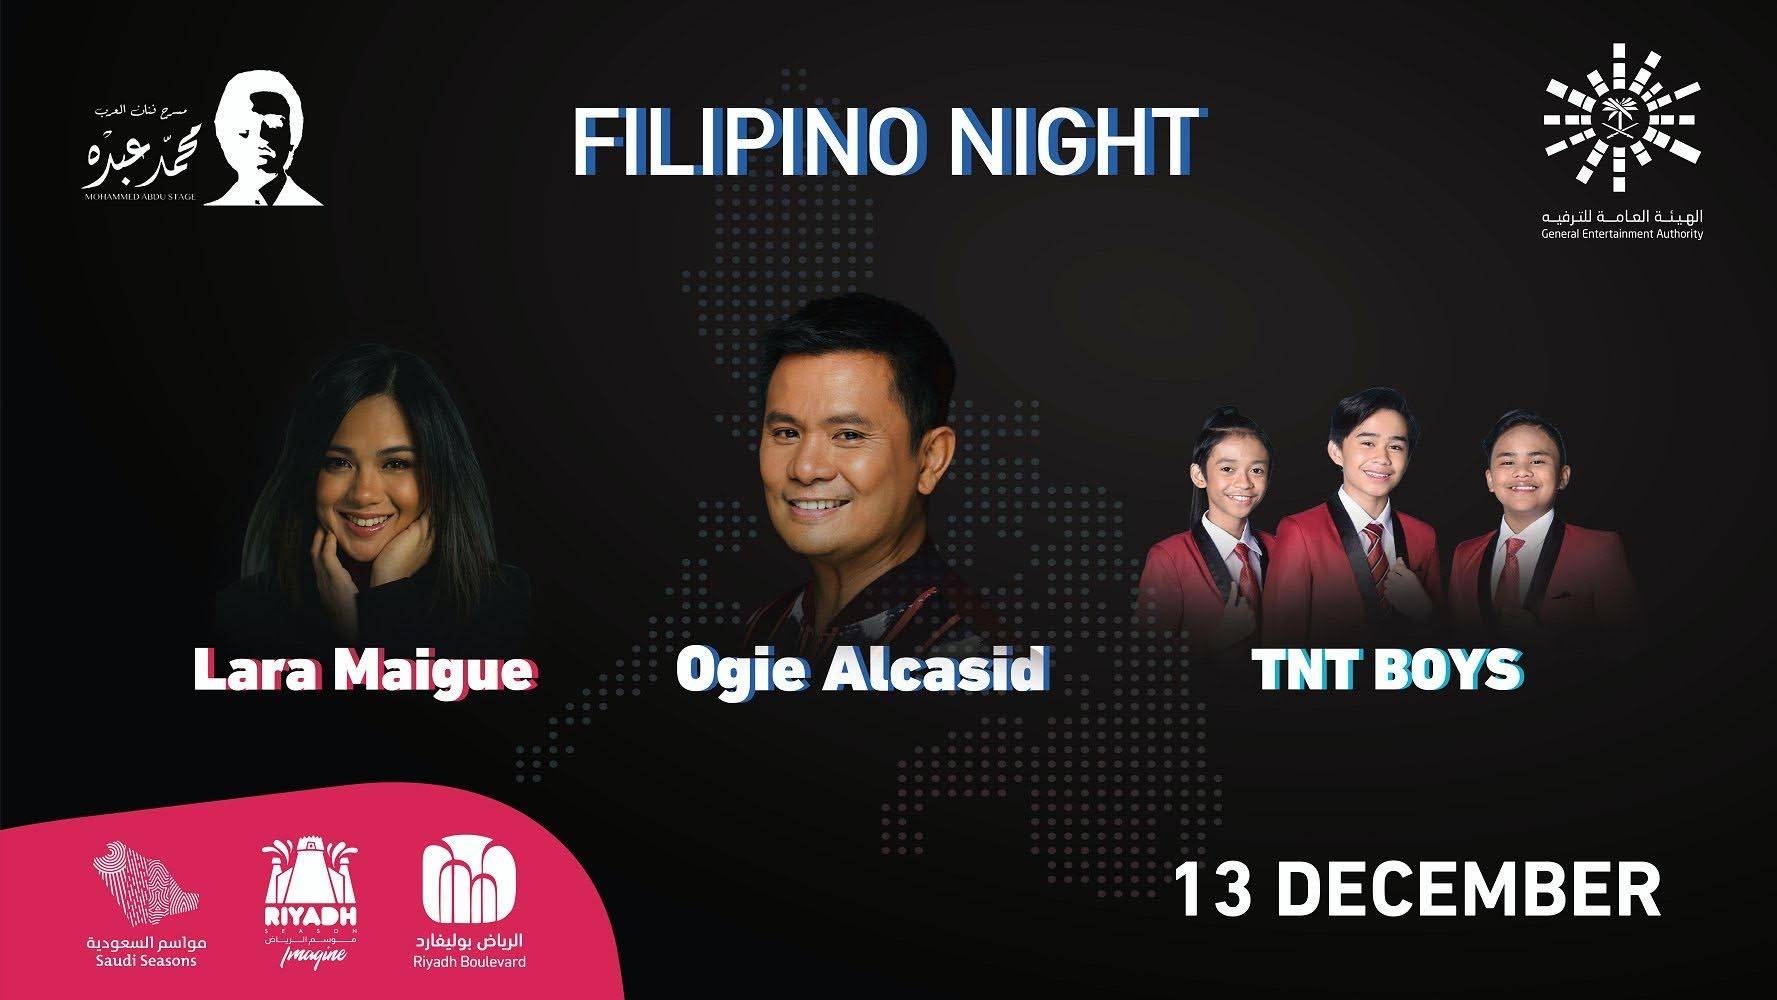 Three Filipino performers to celebrate culture in a magic night at Riyadh